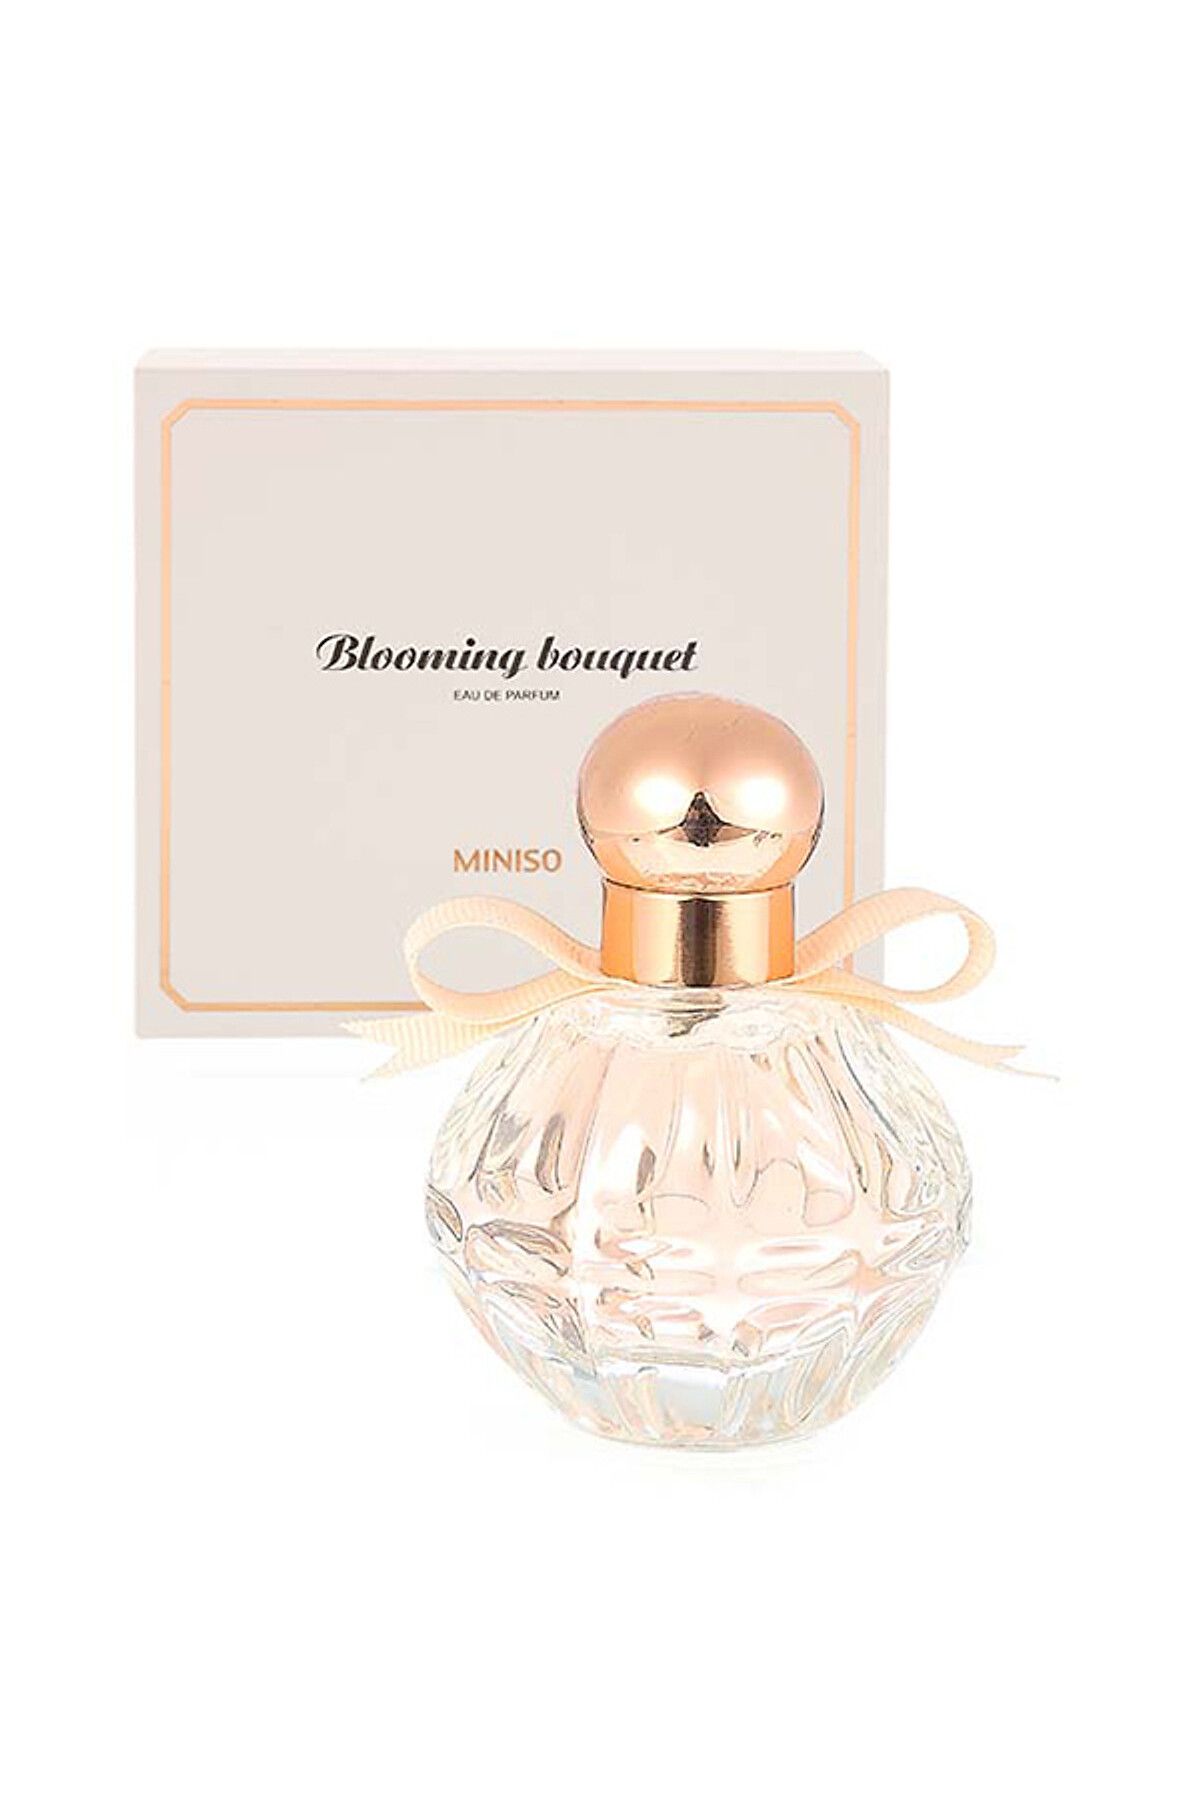 Miniso Blooming Boupuet Eau De Parfum 35ml